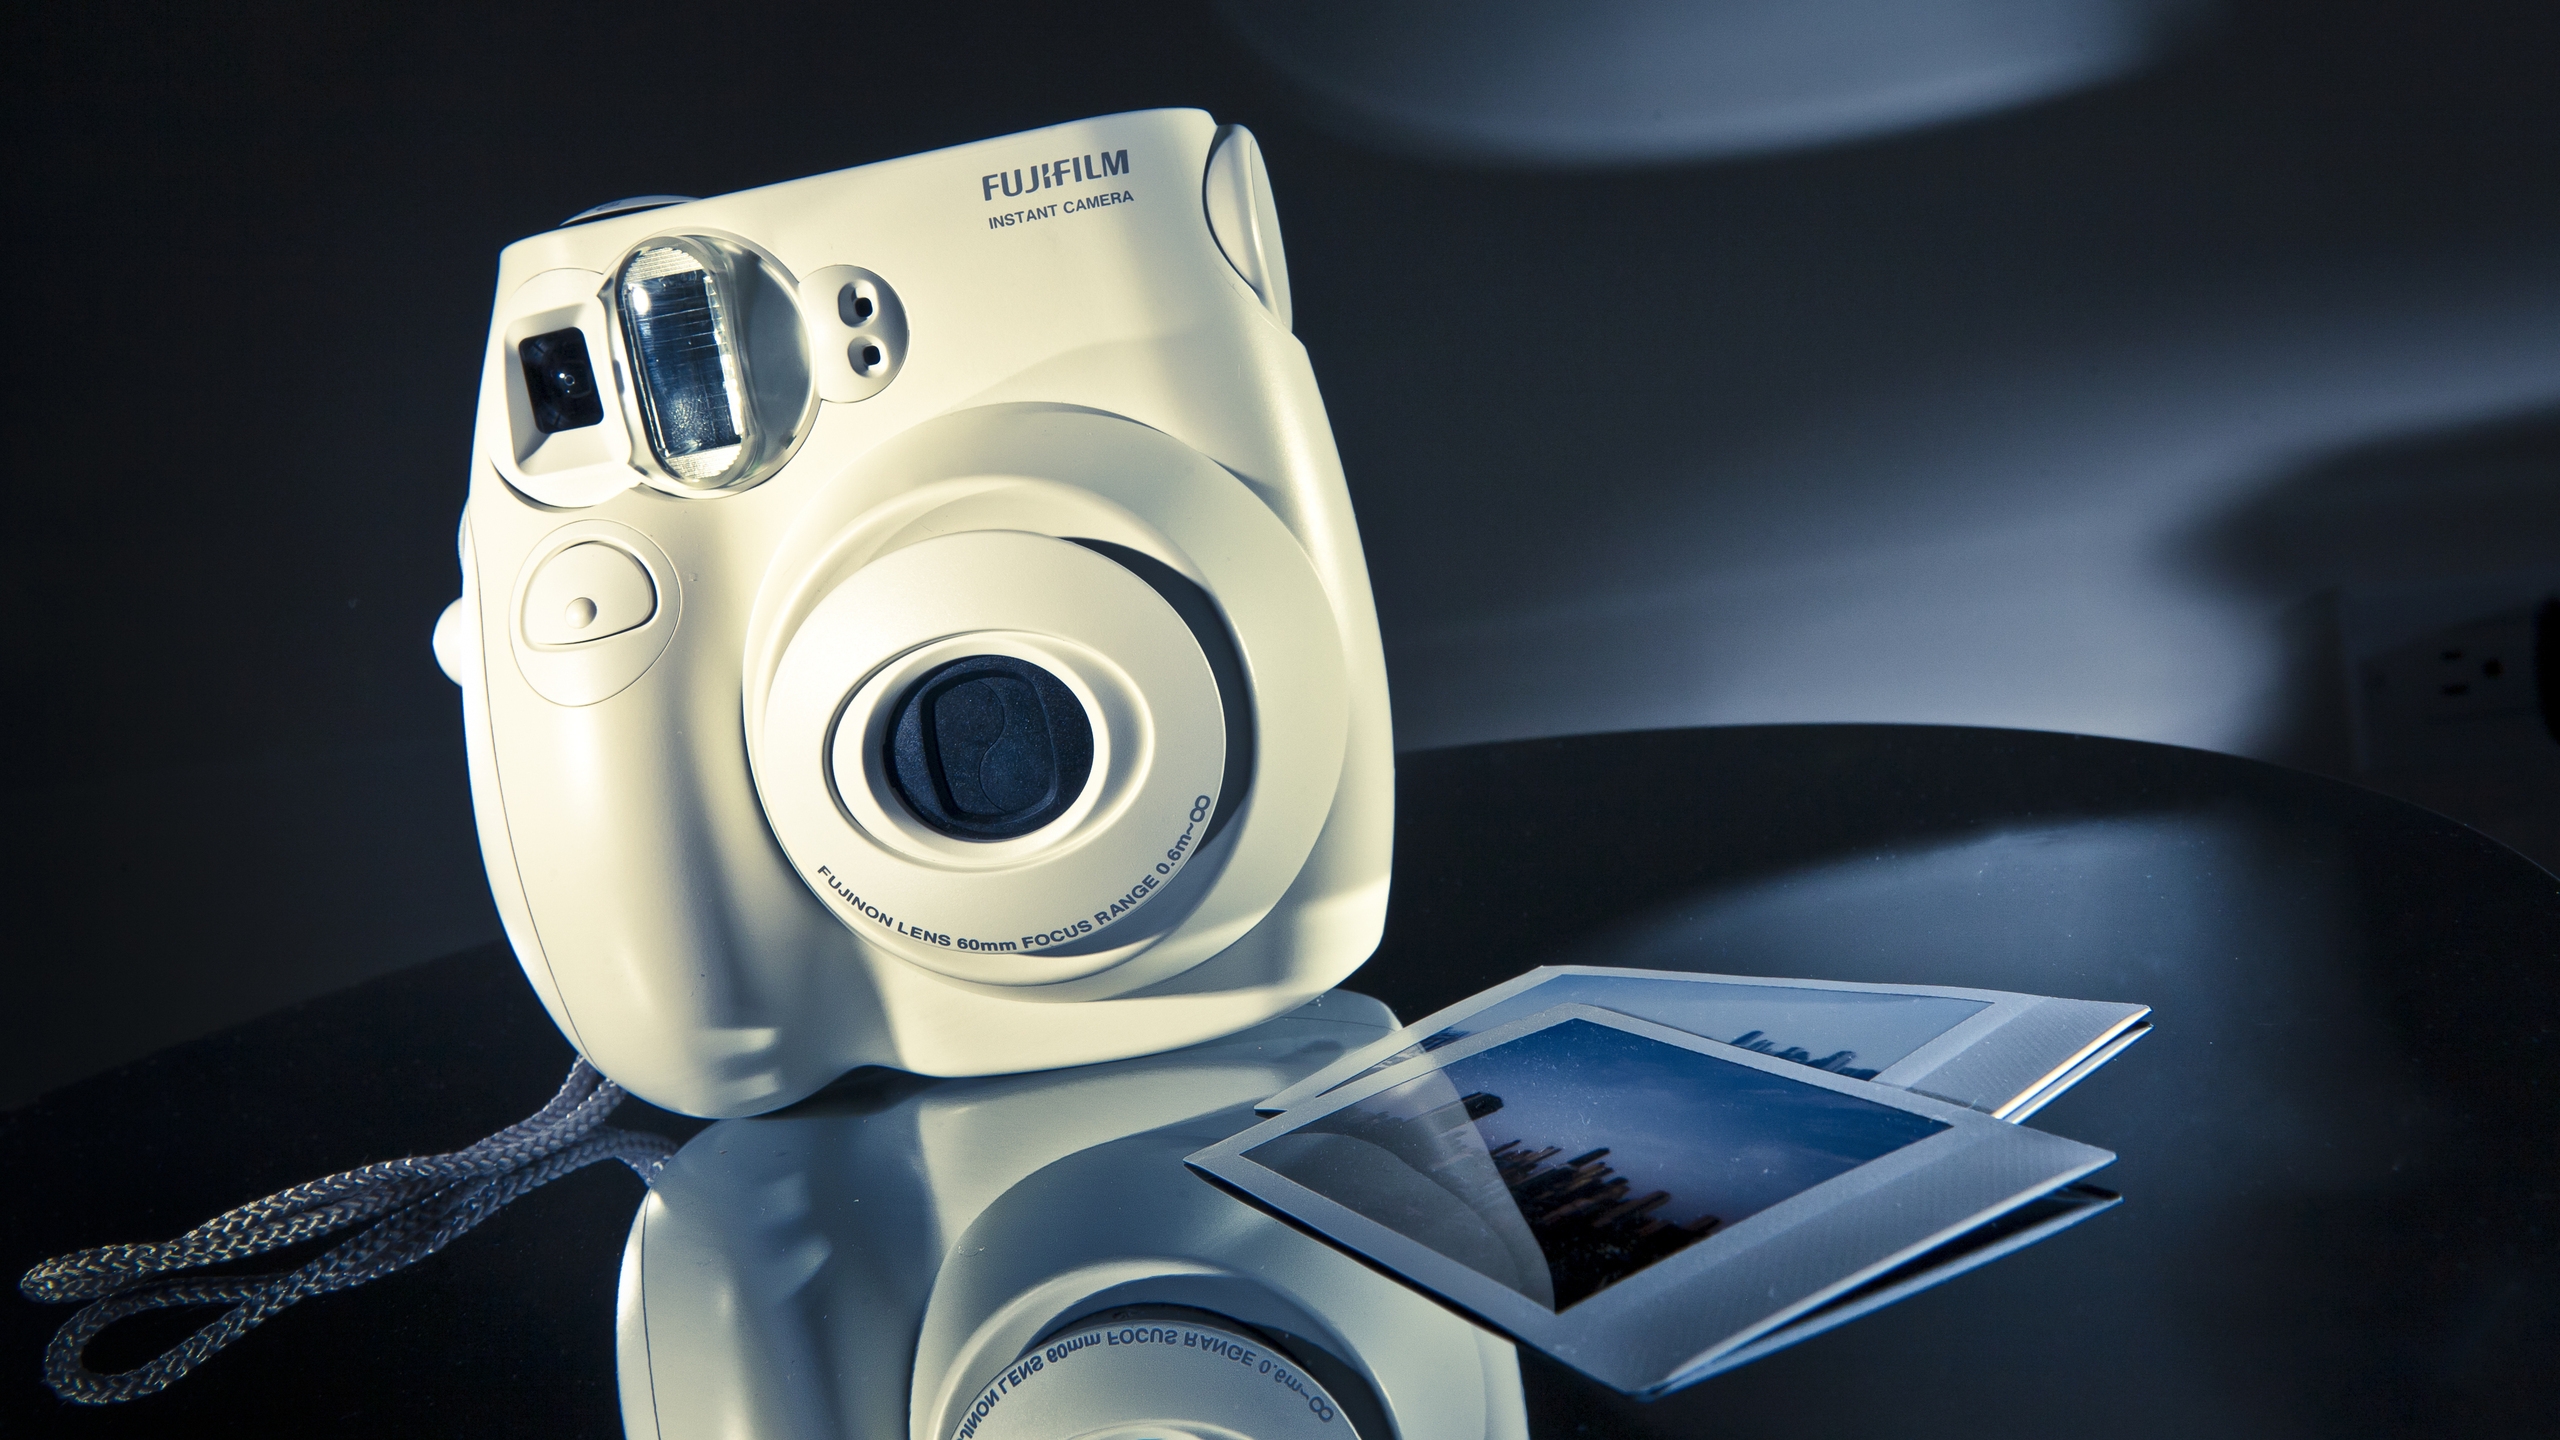 Fujifilm Instax Mini Camera for 2560x1440 HDTV resolution